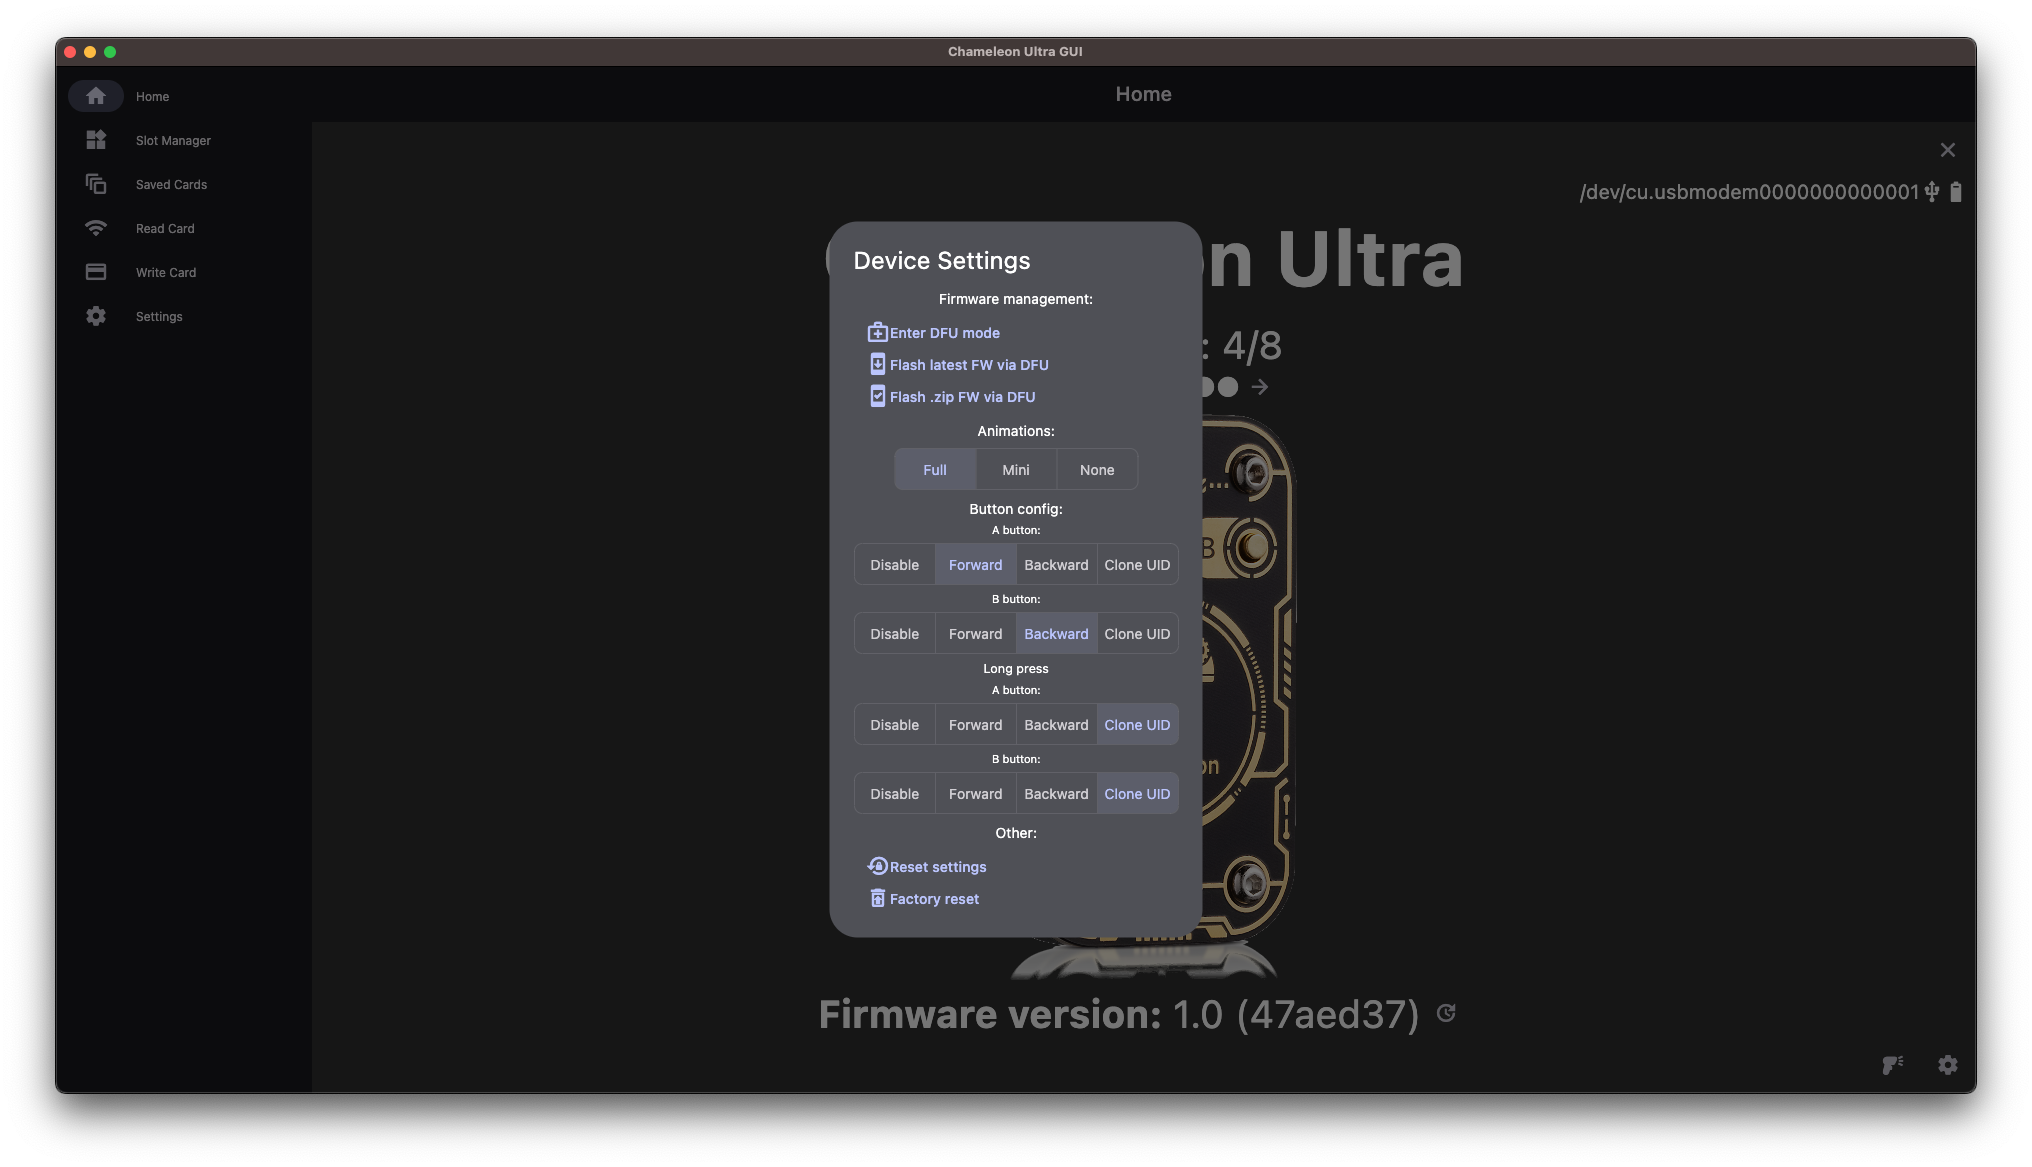 Chameleon Ultra GUI - Device Settings